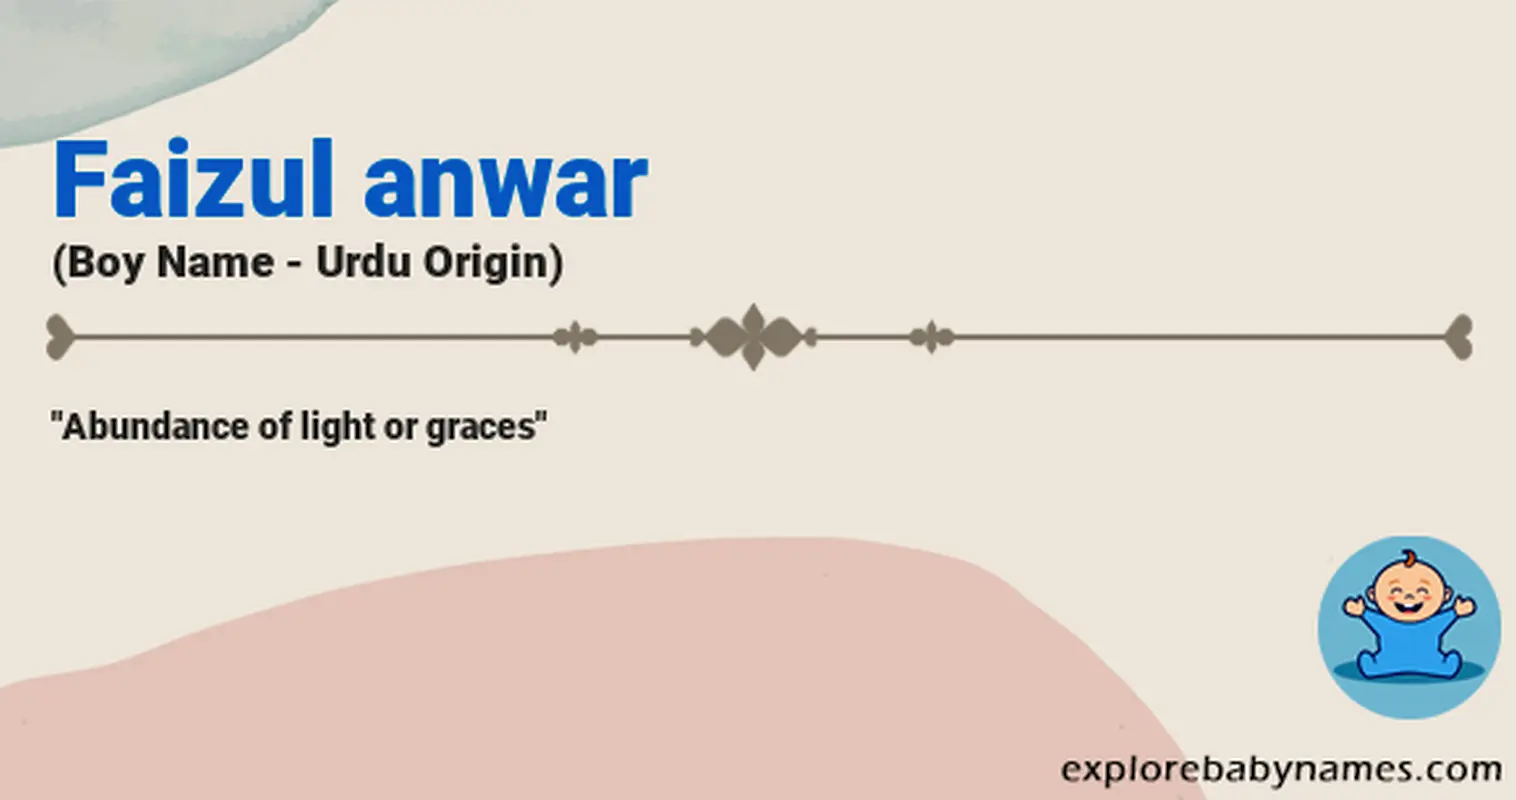 Meaning of Faizul anwar